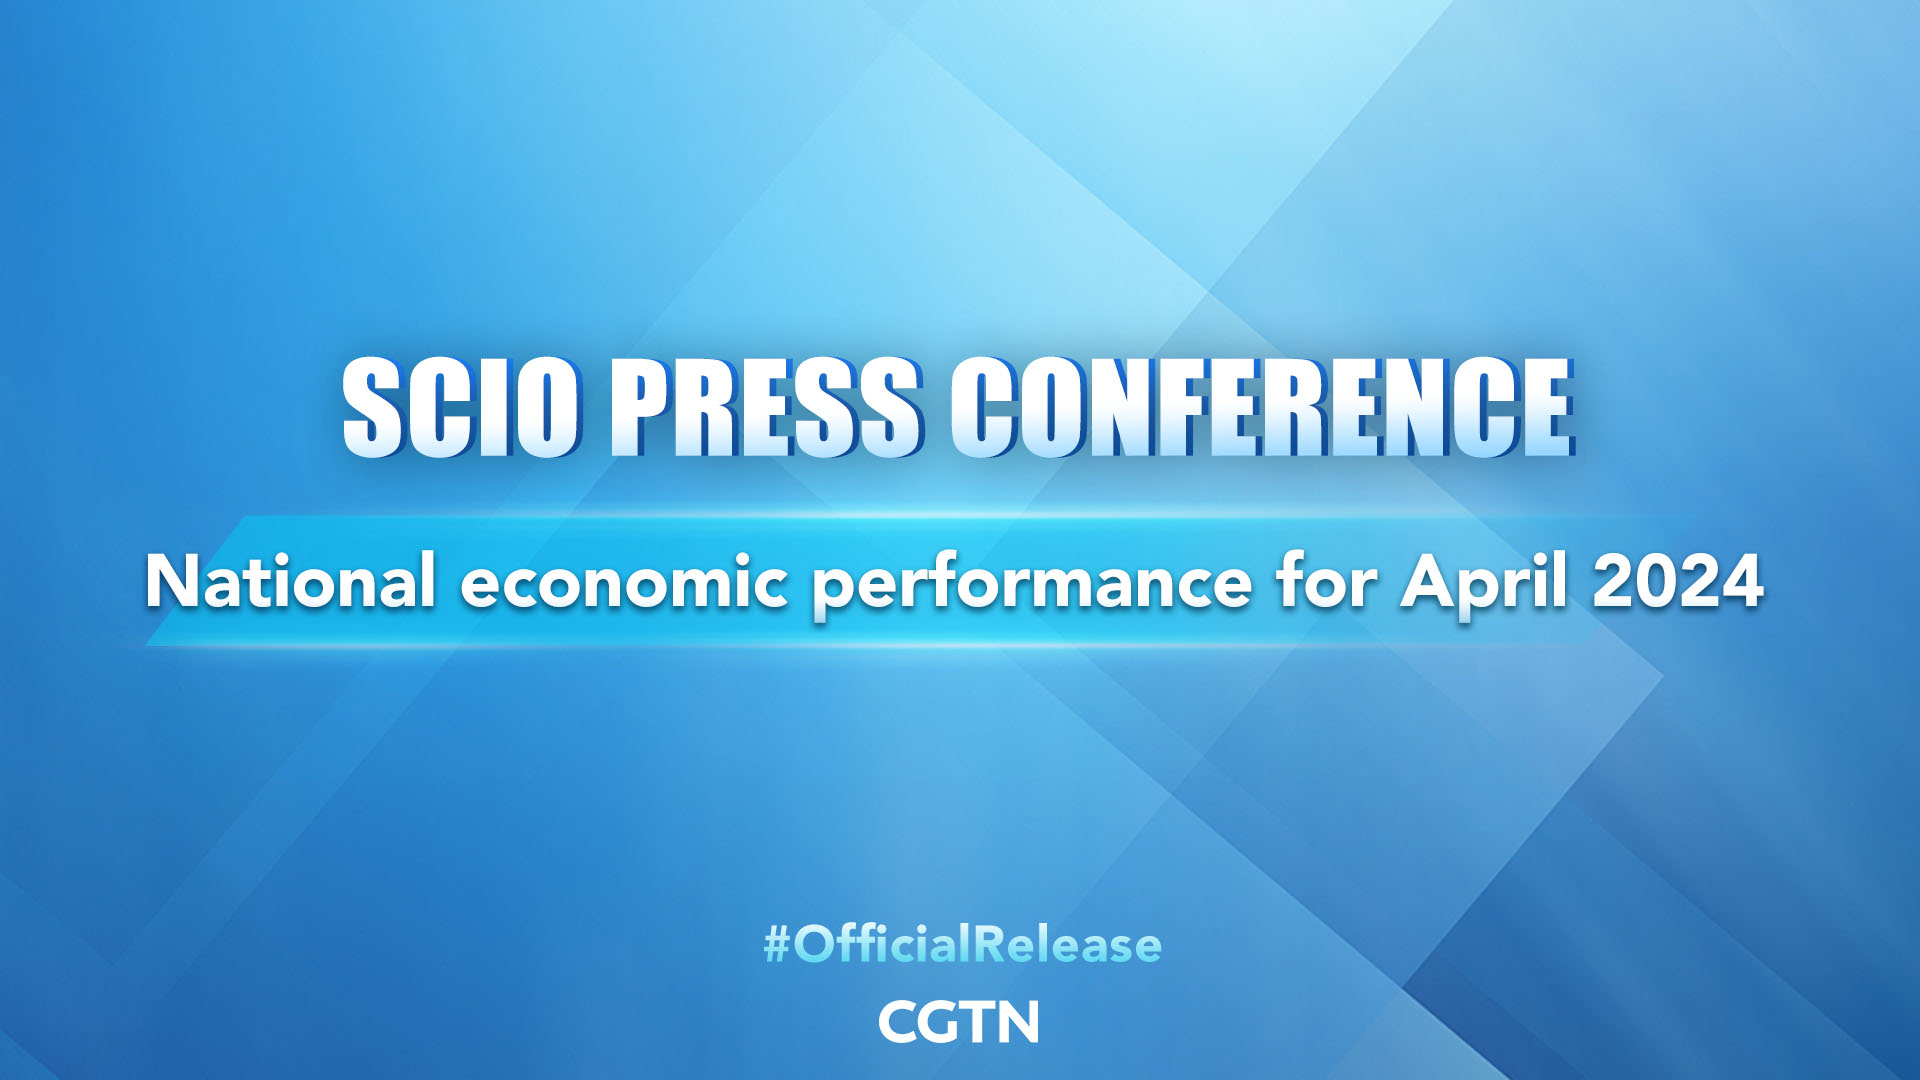 Live: SCIO press conference on China's economic performance for April 